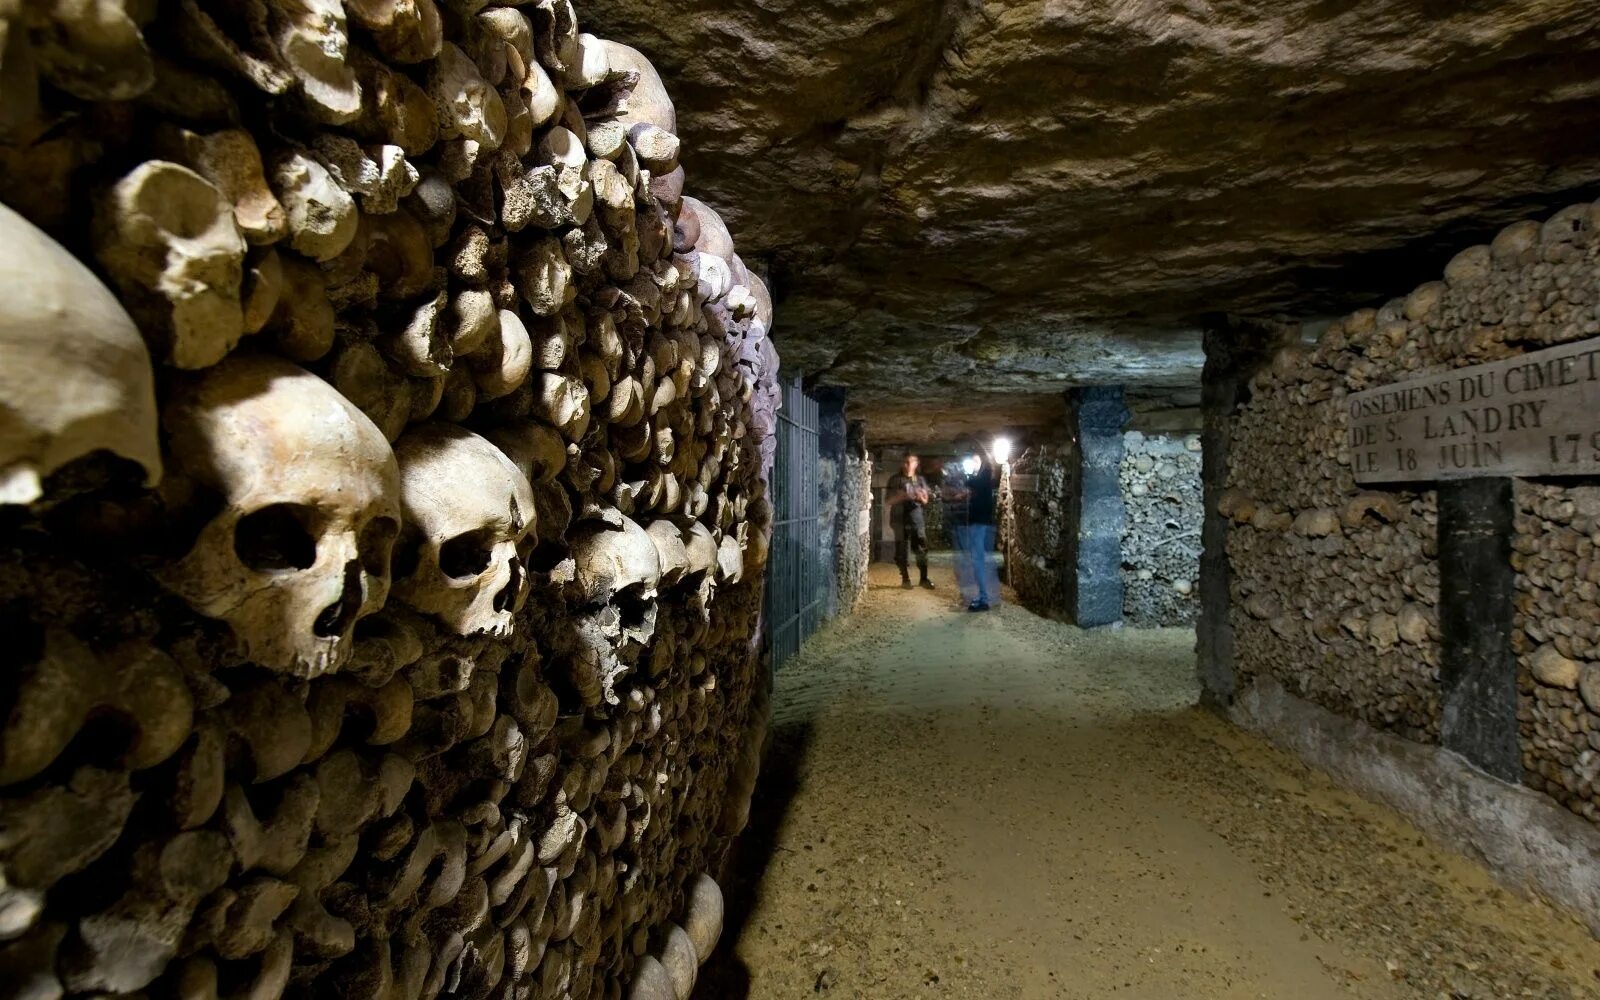 The catacombs of solaris revisited. Кости в катакомбах Парижа. Катакомбы Парижа, Франция. Катакомбы Парижа (Catacombs of Paris), Франция.